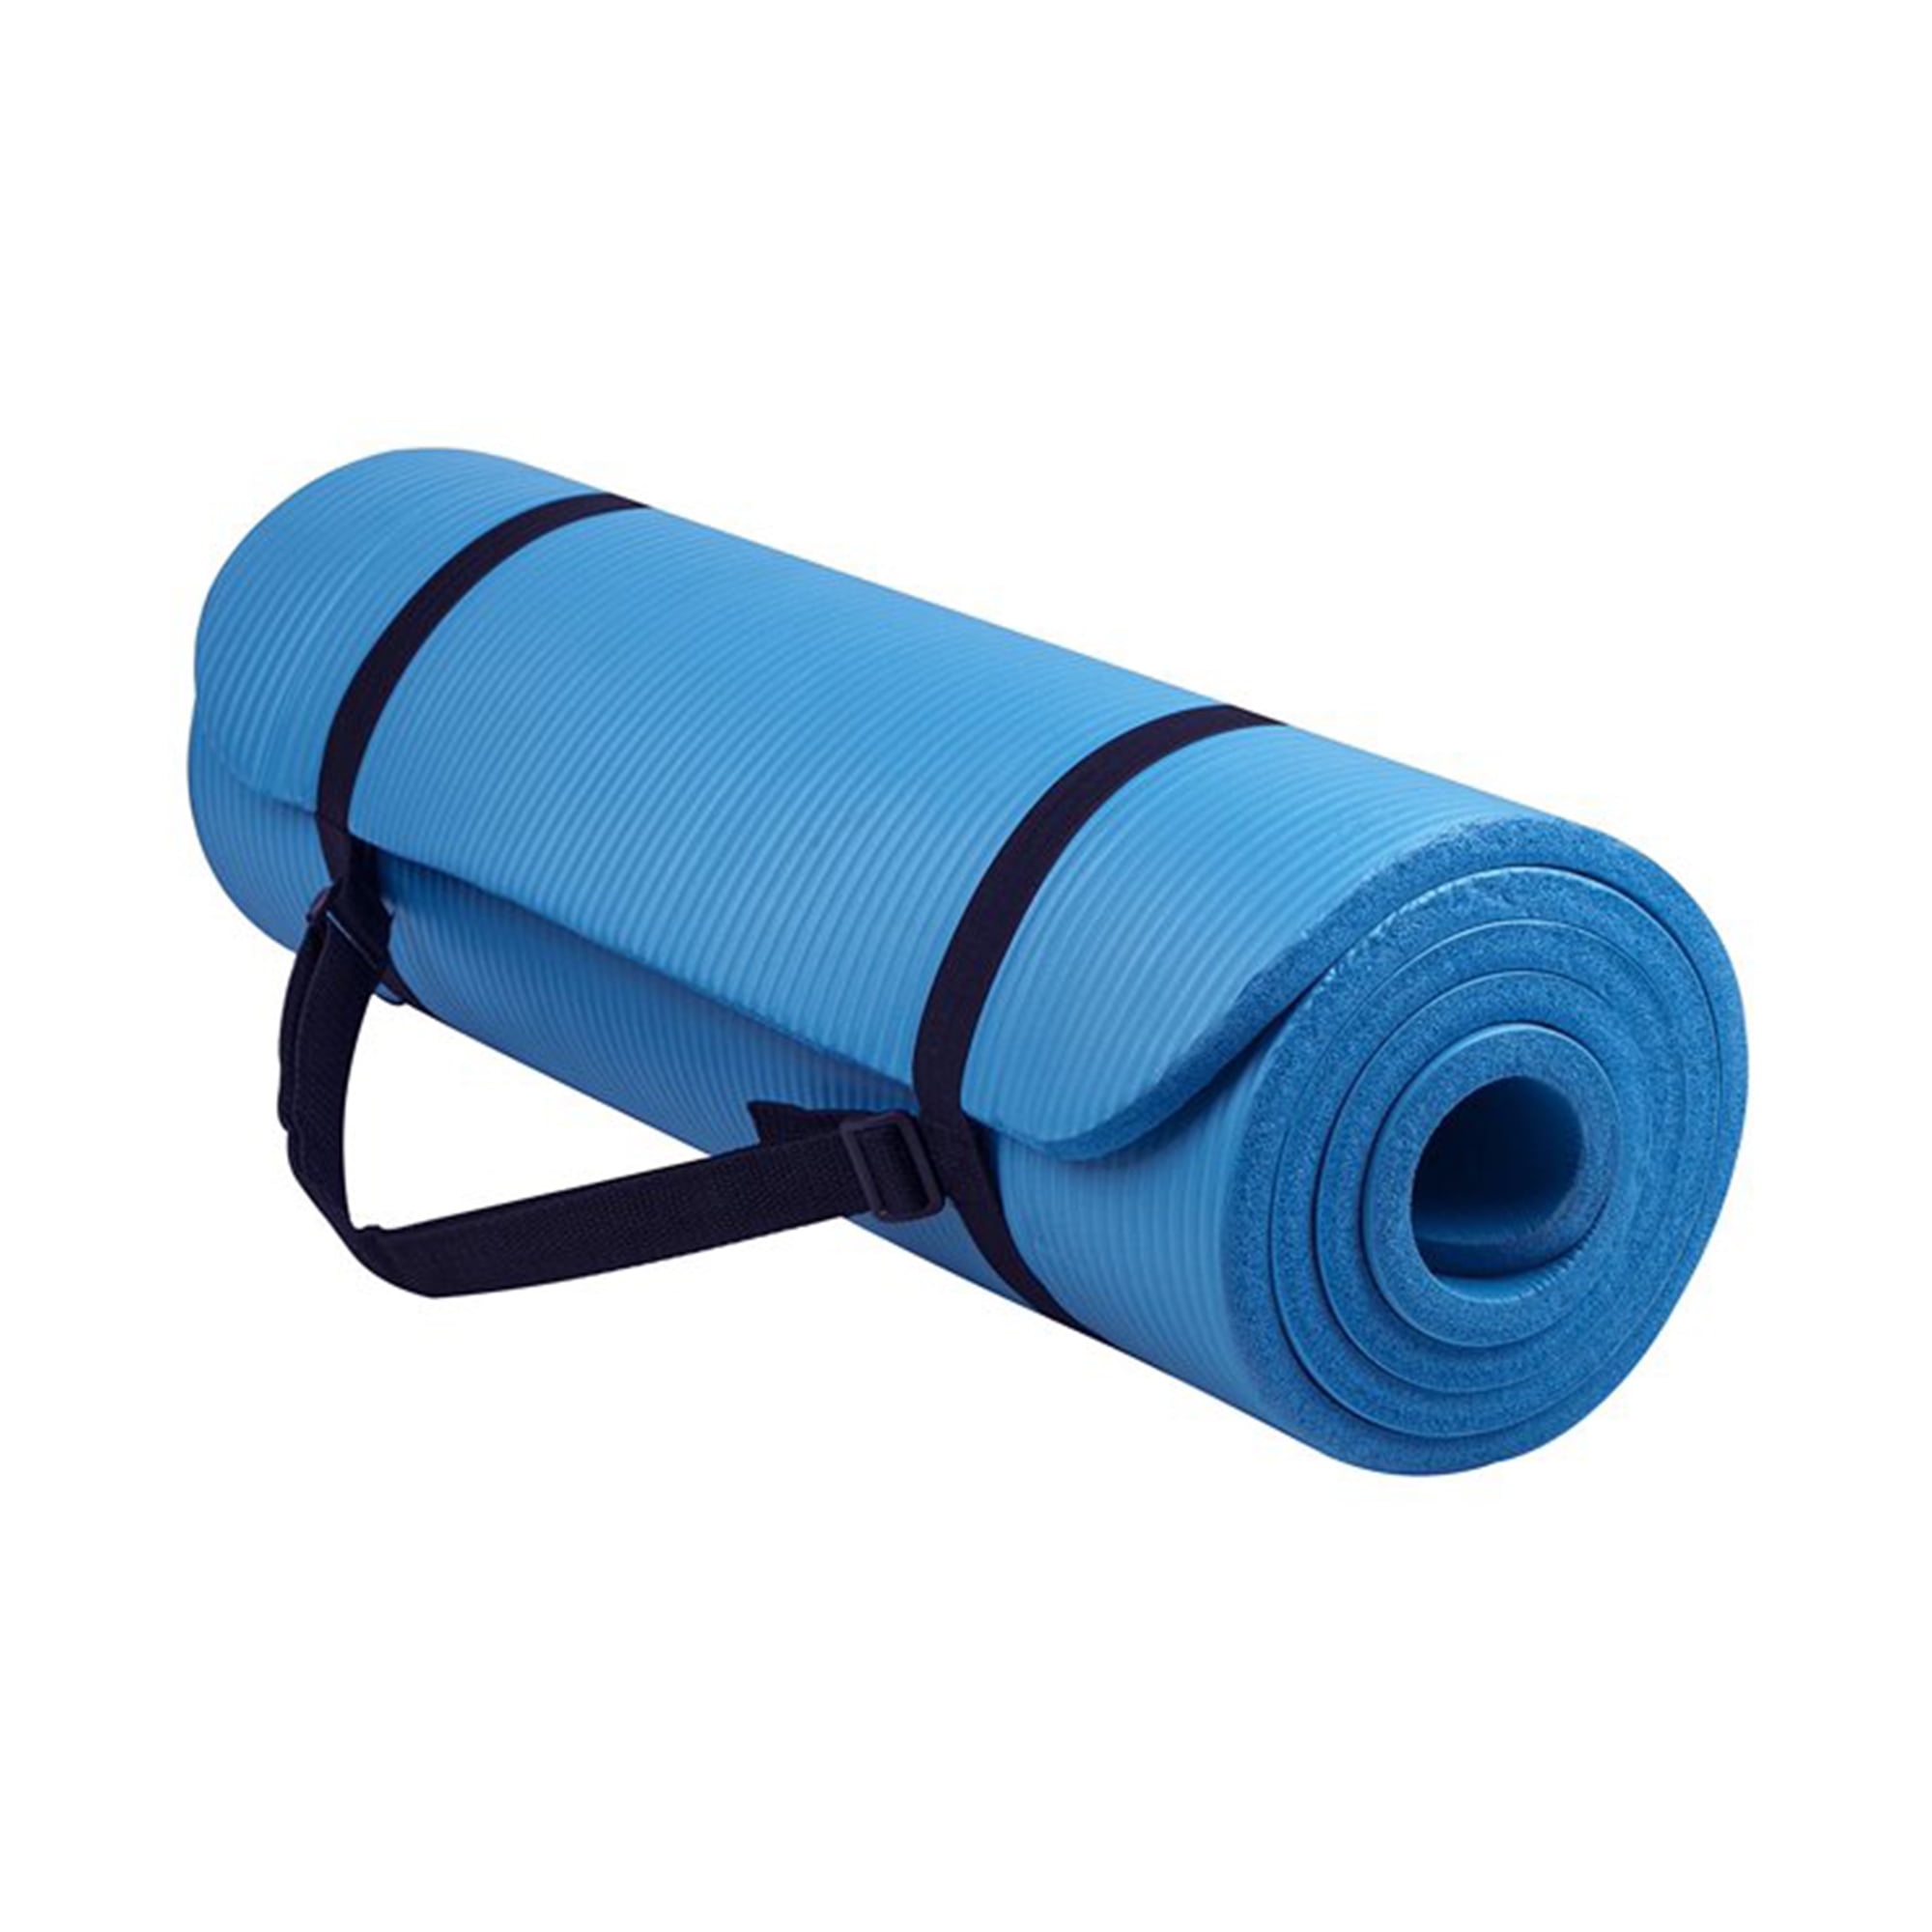 24 x USA Pro Yoga Mats Blue, Sports Directory